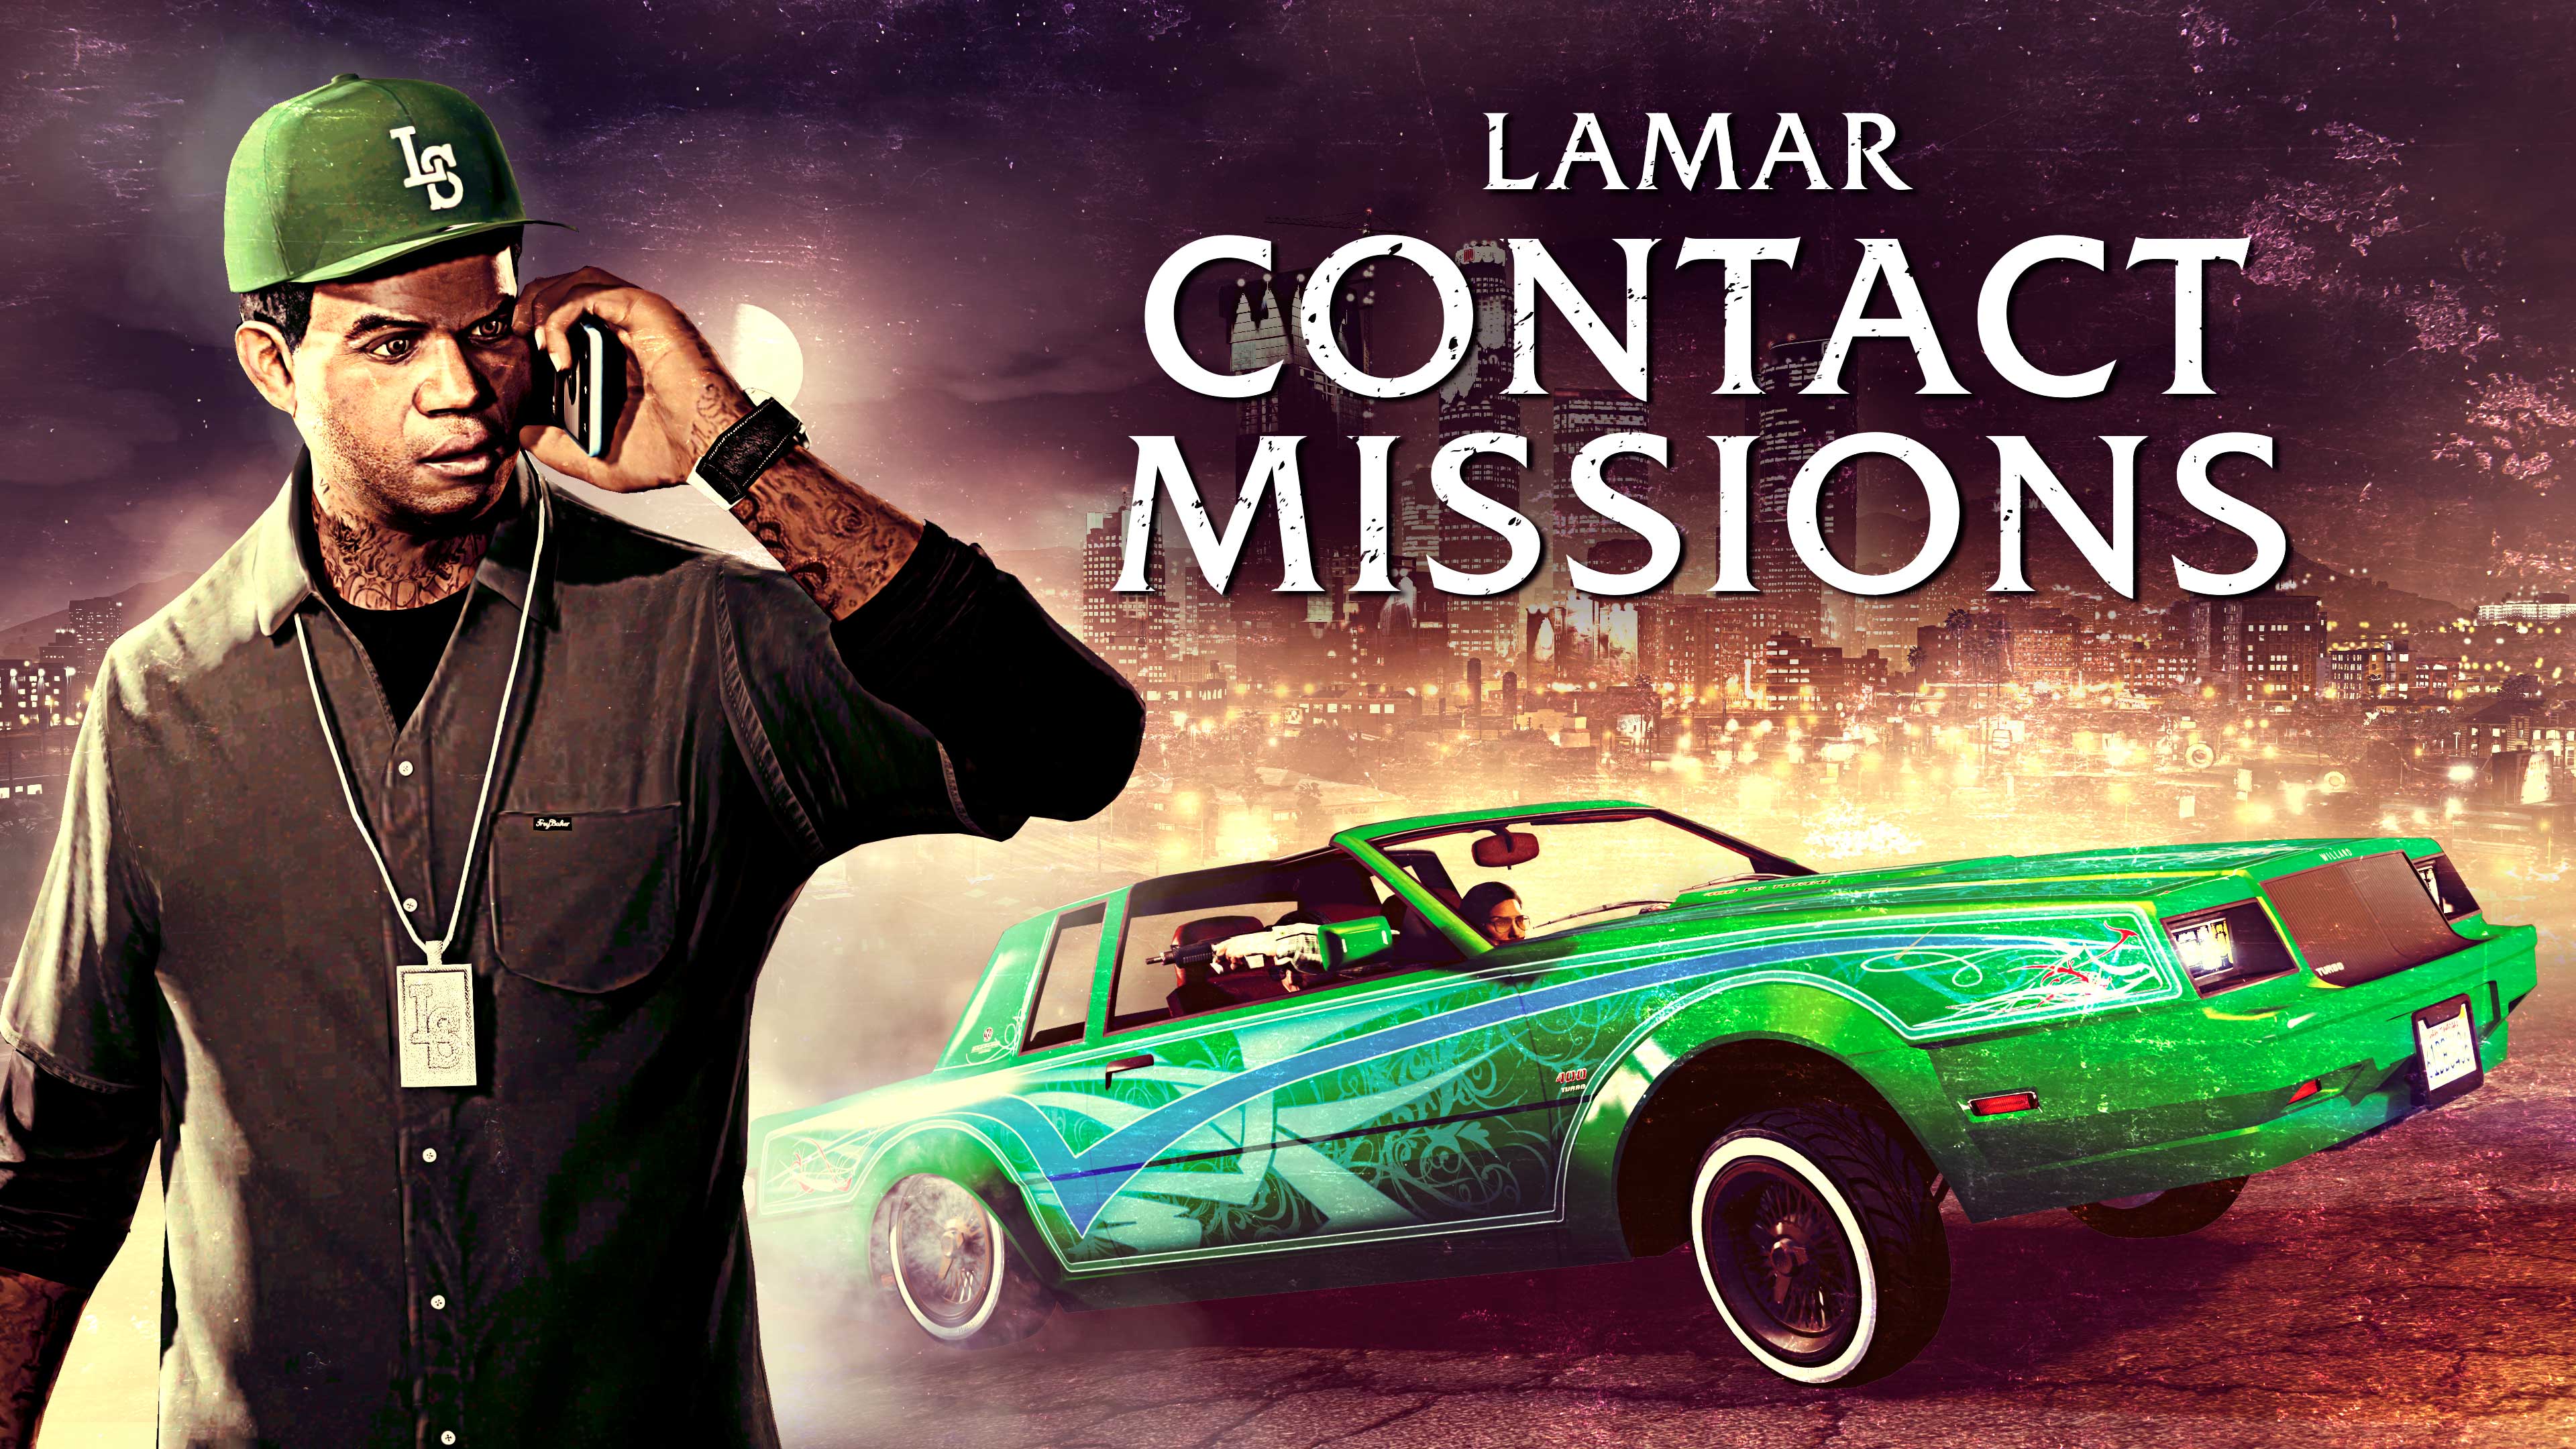 Pôster de Missões de Contato do Lamar.